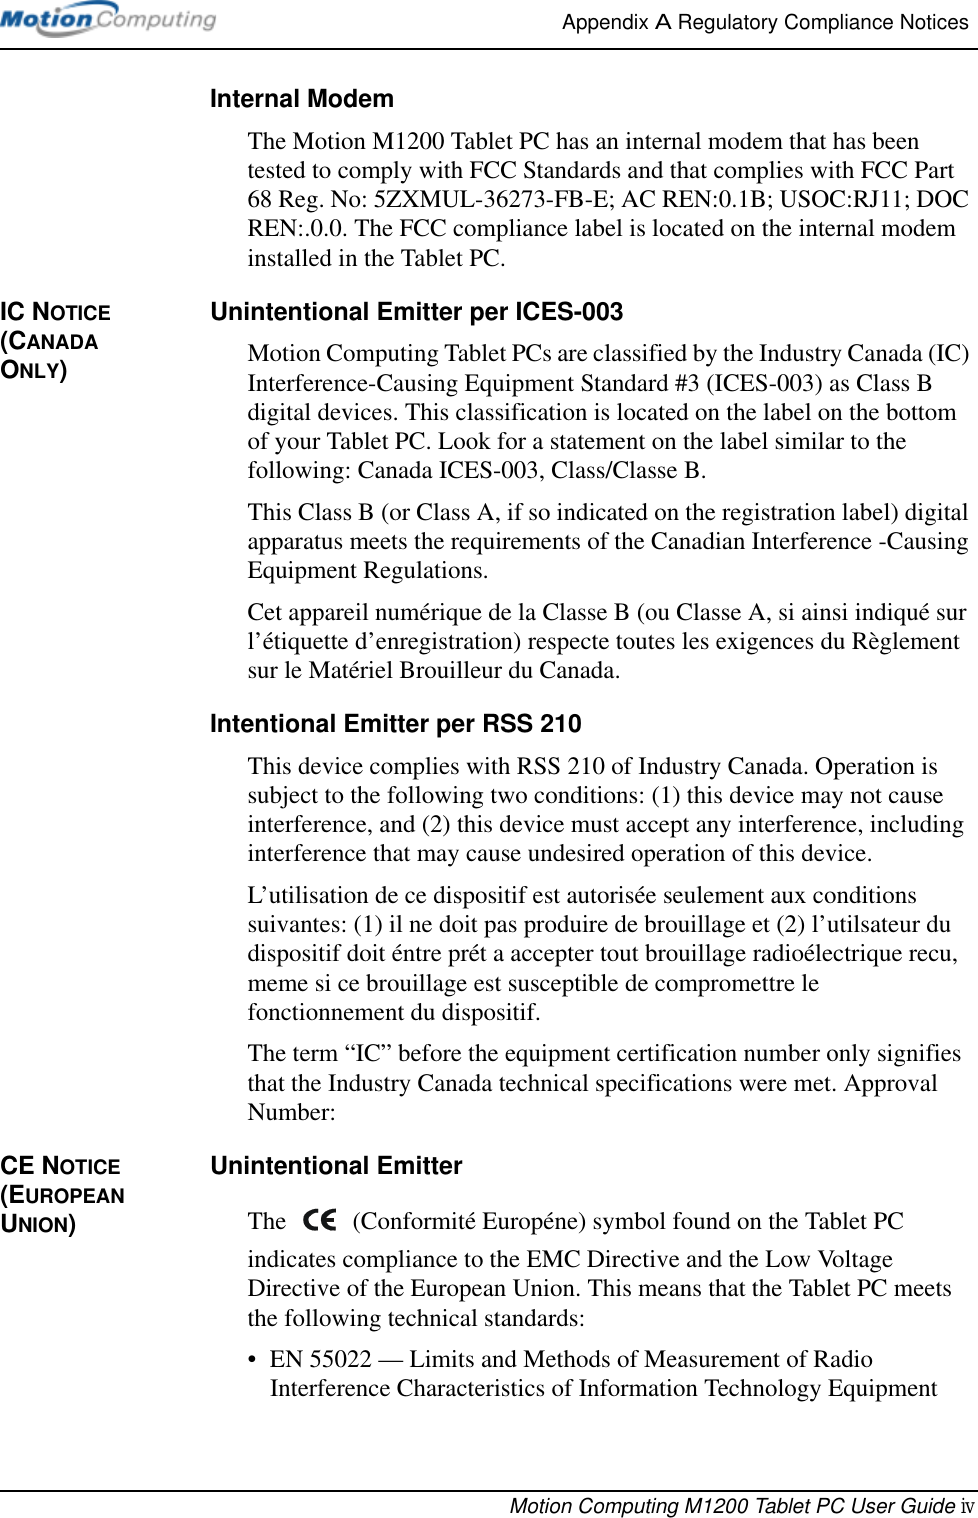 Appendix A Regulatory Compliance Notices Motion Computing M1200 Tablet PC User Guide ivInternal ModemThe Motion M1200 Tablet PC has an internal modem that has been tested to comply with FCC Standards and that complies with FCC Part 68 Reg. No: 5ZXMUL-36273-FB-E; AC REN:0.1B; USOC:RJ11; DOC REN:.0.0. The FCC compliance label is located on the internal modem installed in the Tablet PC.IC NOTICE (CANADA ONLY)Unintentional Emitter per ICES-003Motion Computing Tablet PCs are classified by the Industry Canada (IC) Interference-Causing Equipment Standard #3 (ICES-003) as Class B digital devices. This classification is located on the label on the bottom of your Tablet PC. Look for a statement on the label similar to the following: Canada ICES-003, Class/Classe B.This Class B (or Class A, if so indicated on the registration label) digital apparatus meets the requirements of the Canadian Interference -Causing Equipment Regulations.Cet appareil numérique de la Classe B (ou Classe A, si ainsi indiqué sur l’étiquette d’enregistration) respecte toutes les exigences du Règlement sur le Matériel Brouilleur du Canada.Intentional Emitter per RSS 210This device complies with RSS 210 of Industry Canada. Operation is subject to the following two conditions: (1) this device may not cause interference, and (2) this device must accept any interference, including interference that may cause undesired operation of this device.L’utilisation de ce dispositif est autorisée seulement aux conditions suivantes: (1) il ne doit pas produire de brouillage et (2) l’utilsateur du dispositif doit éntre prét a accepter tout brouillage radioélectrique recu, meme si ce brouillage est susceptible de compromettre le fonctionnement du dispositif.The term “IC” before the equipment certification number only signifies that the Industry Canada technical specifications were met. Approval Number:CE NOTICE (EUROPEAN UNION)Unintentional Emitter The   (Conformité Européne) symbol found on the Tablet PC indicates compliance to the EMC Directive and the Low Voltage Directive of the European Union. This means that the Tablet PC meets the following technical standards:• EN 55022 — Limits and Methods of Measurement of Radio Interference Characteristics of Information Technology Equipment